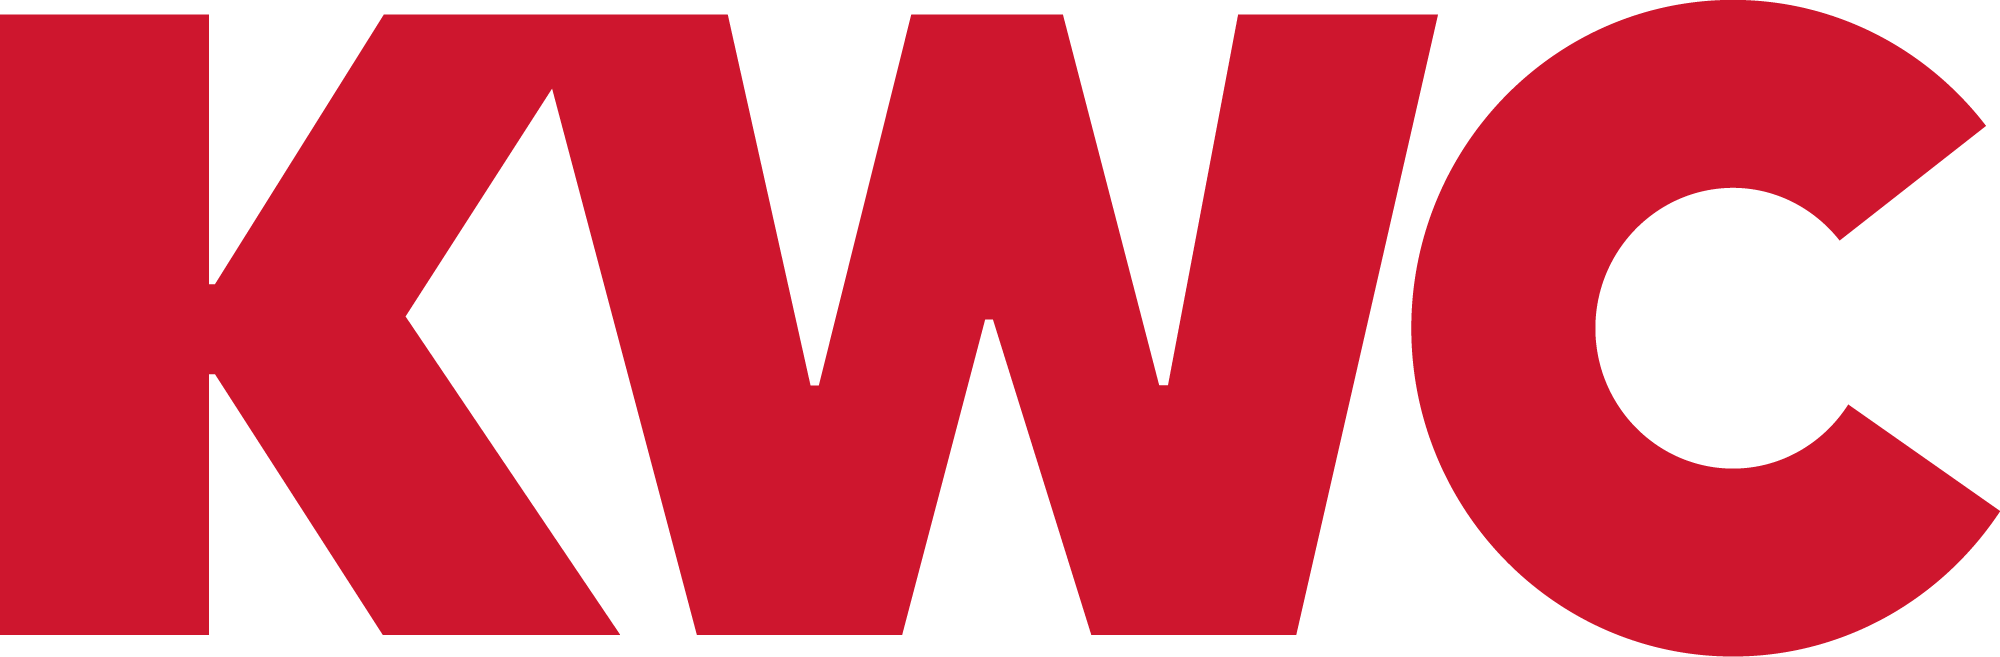 KWC_Logo_RGB